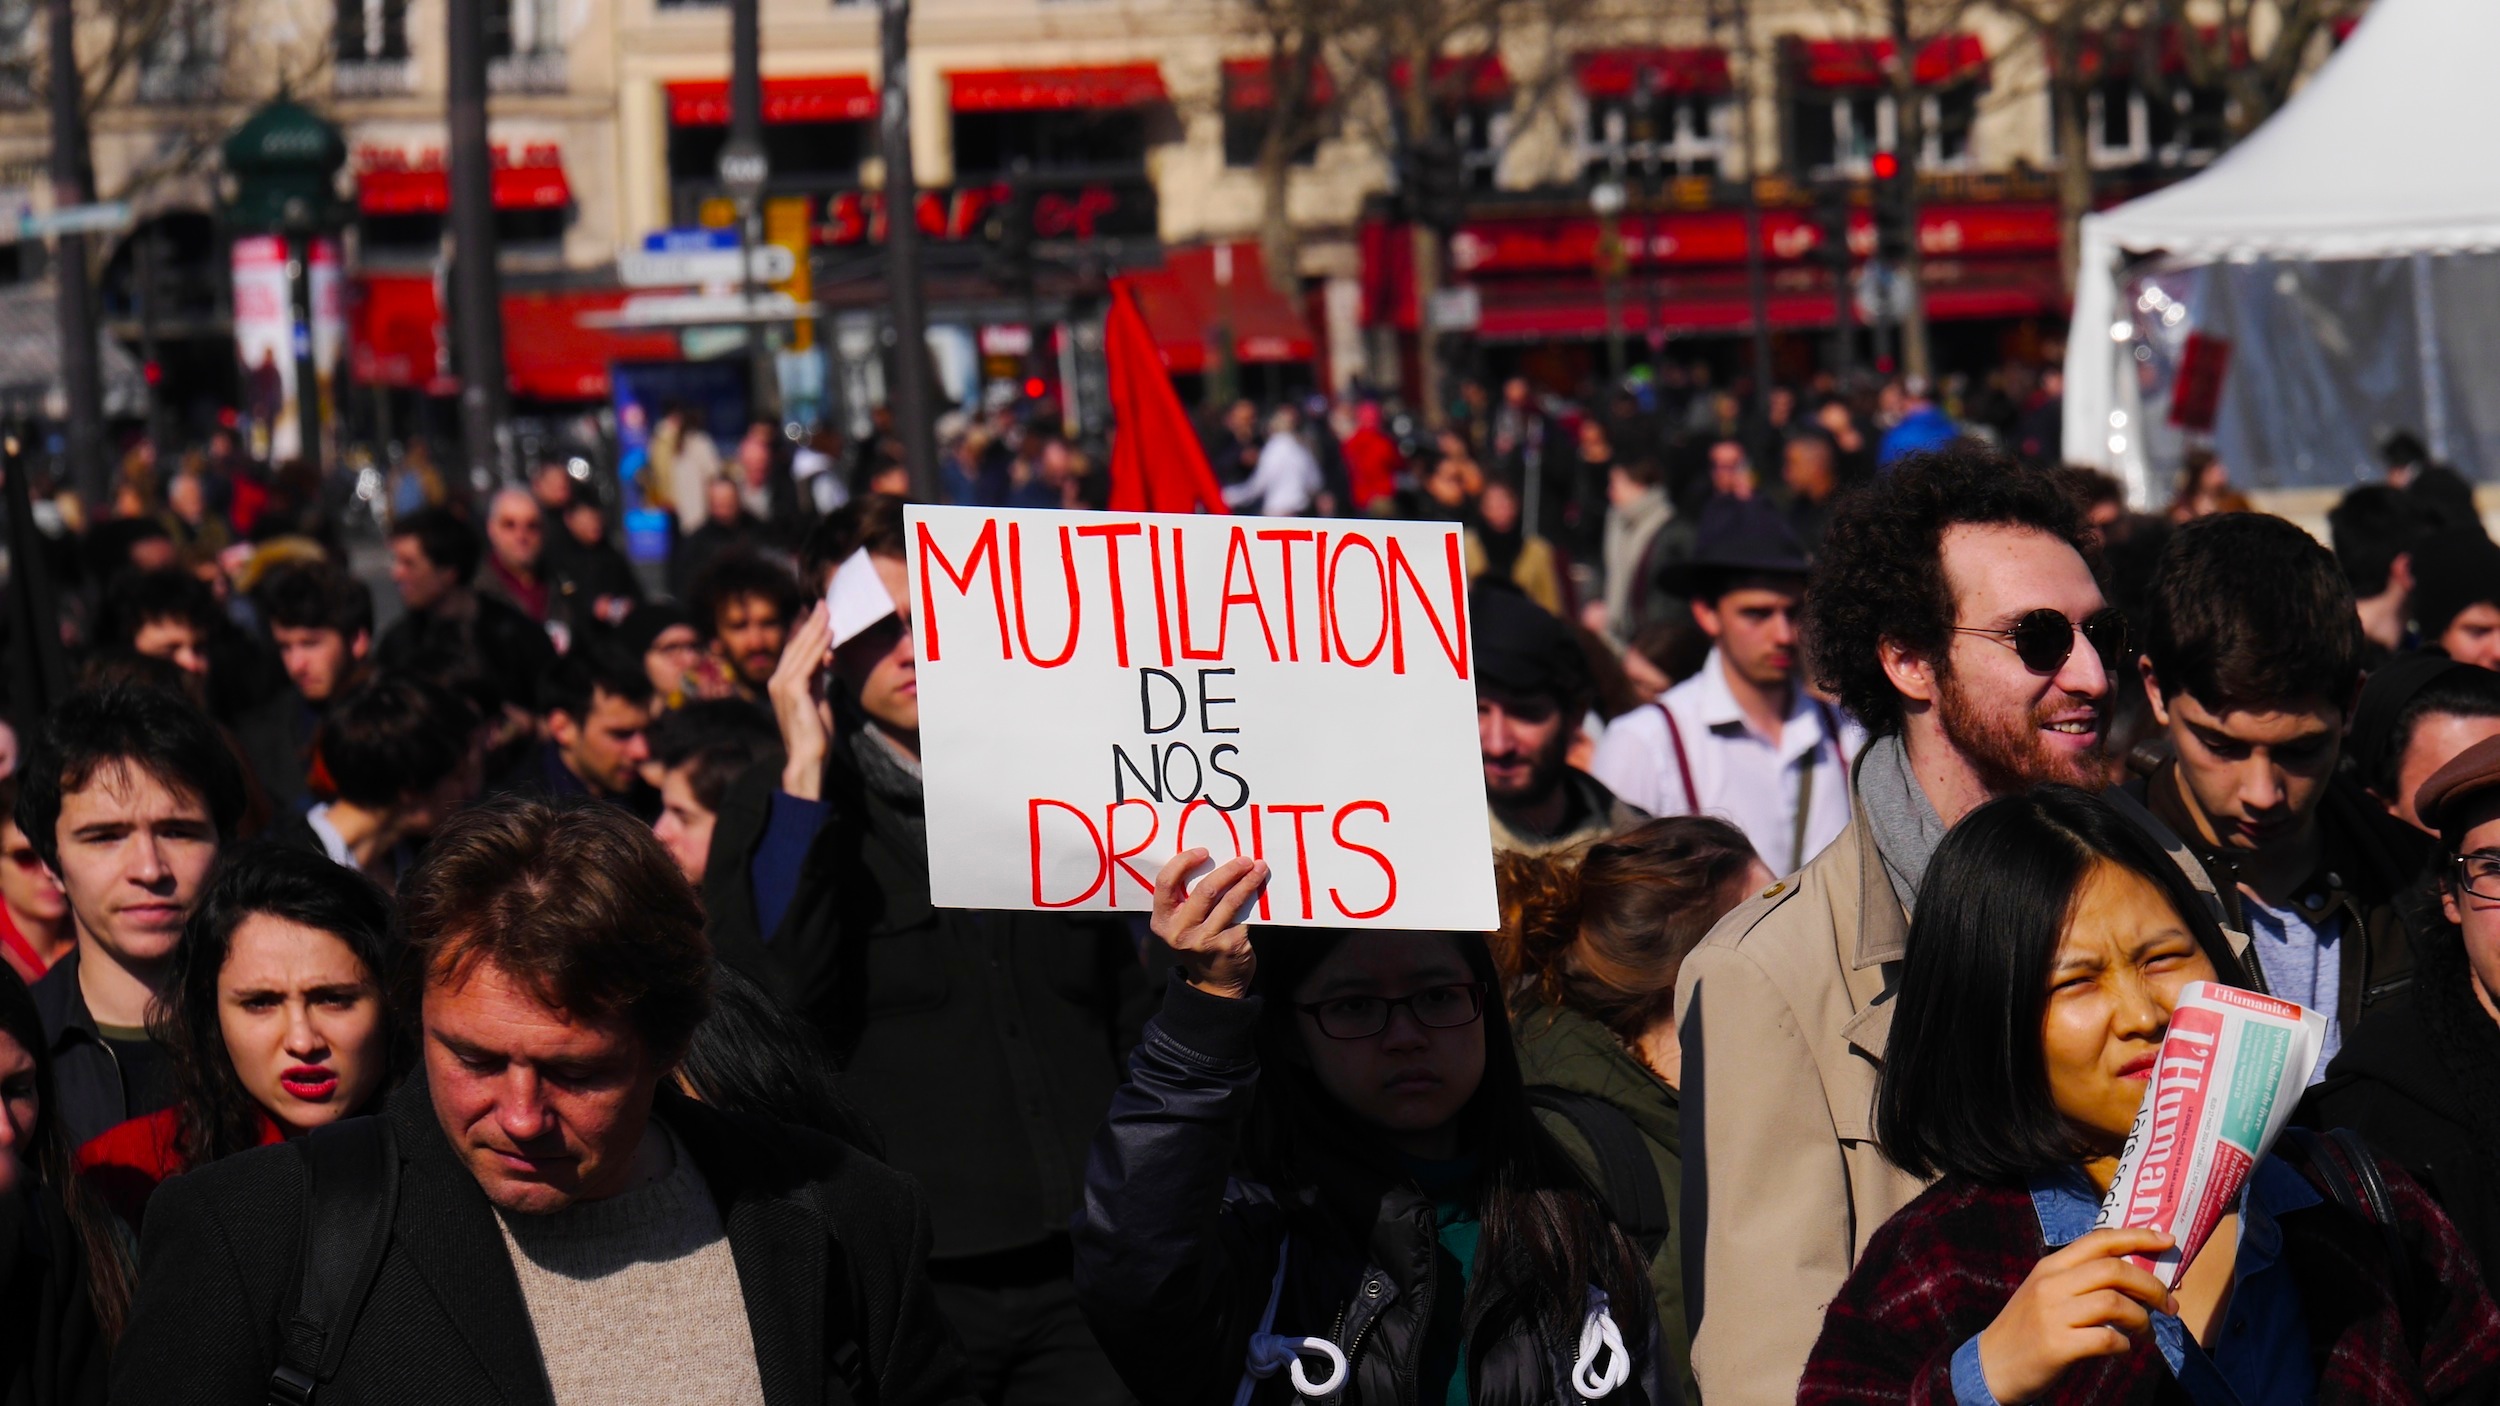 «Mutilation de nos droits»